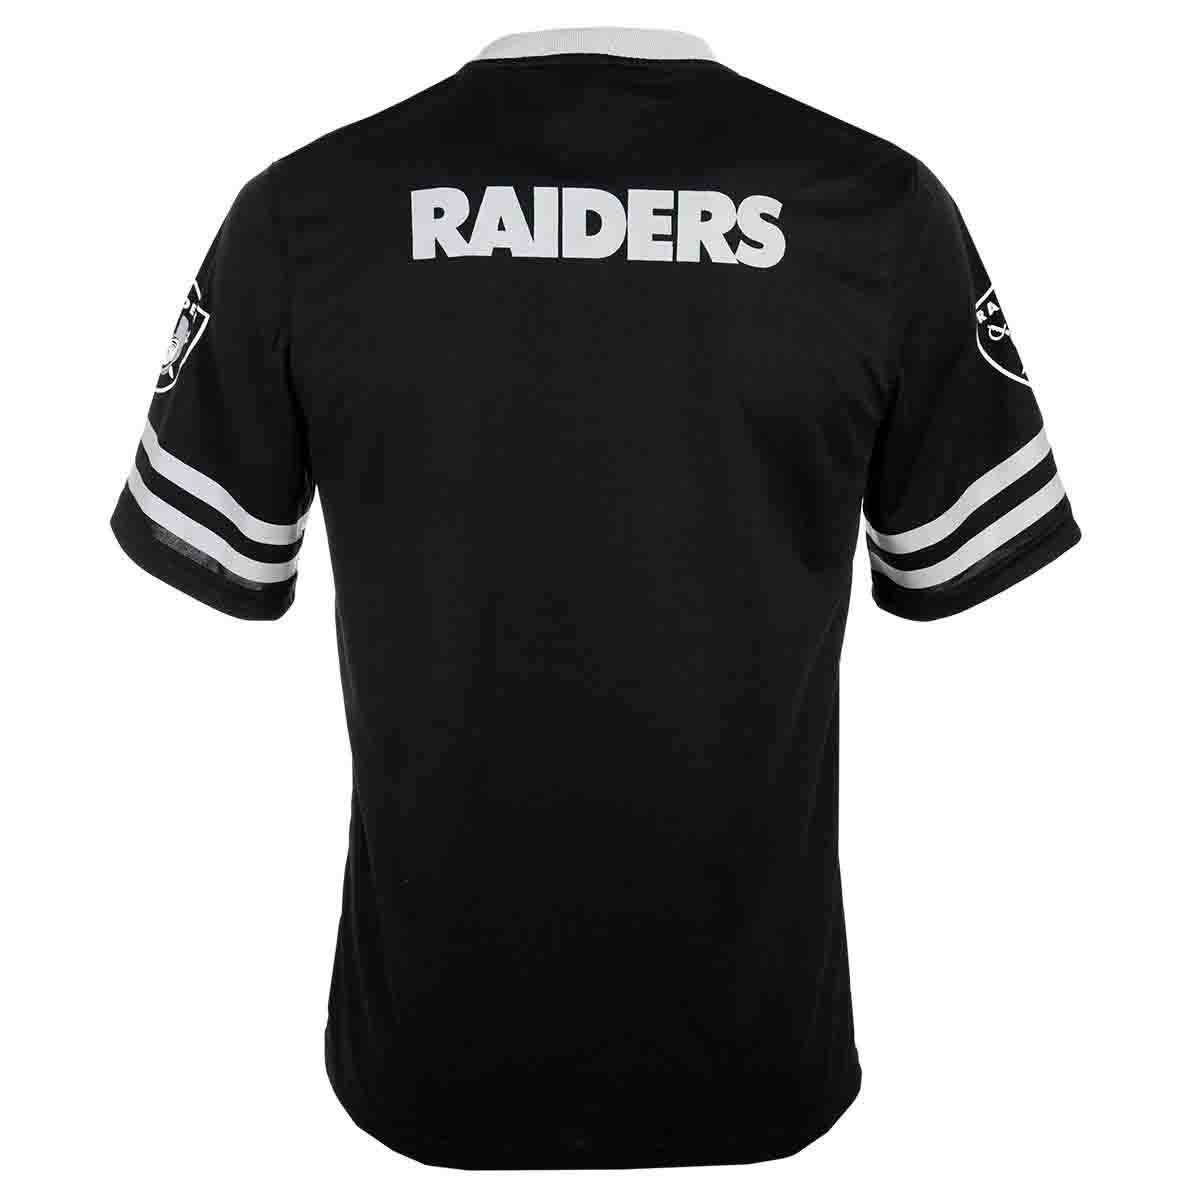 Jersey Raiders Nfl - Caballero